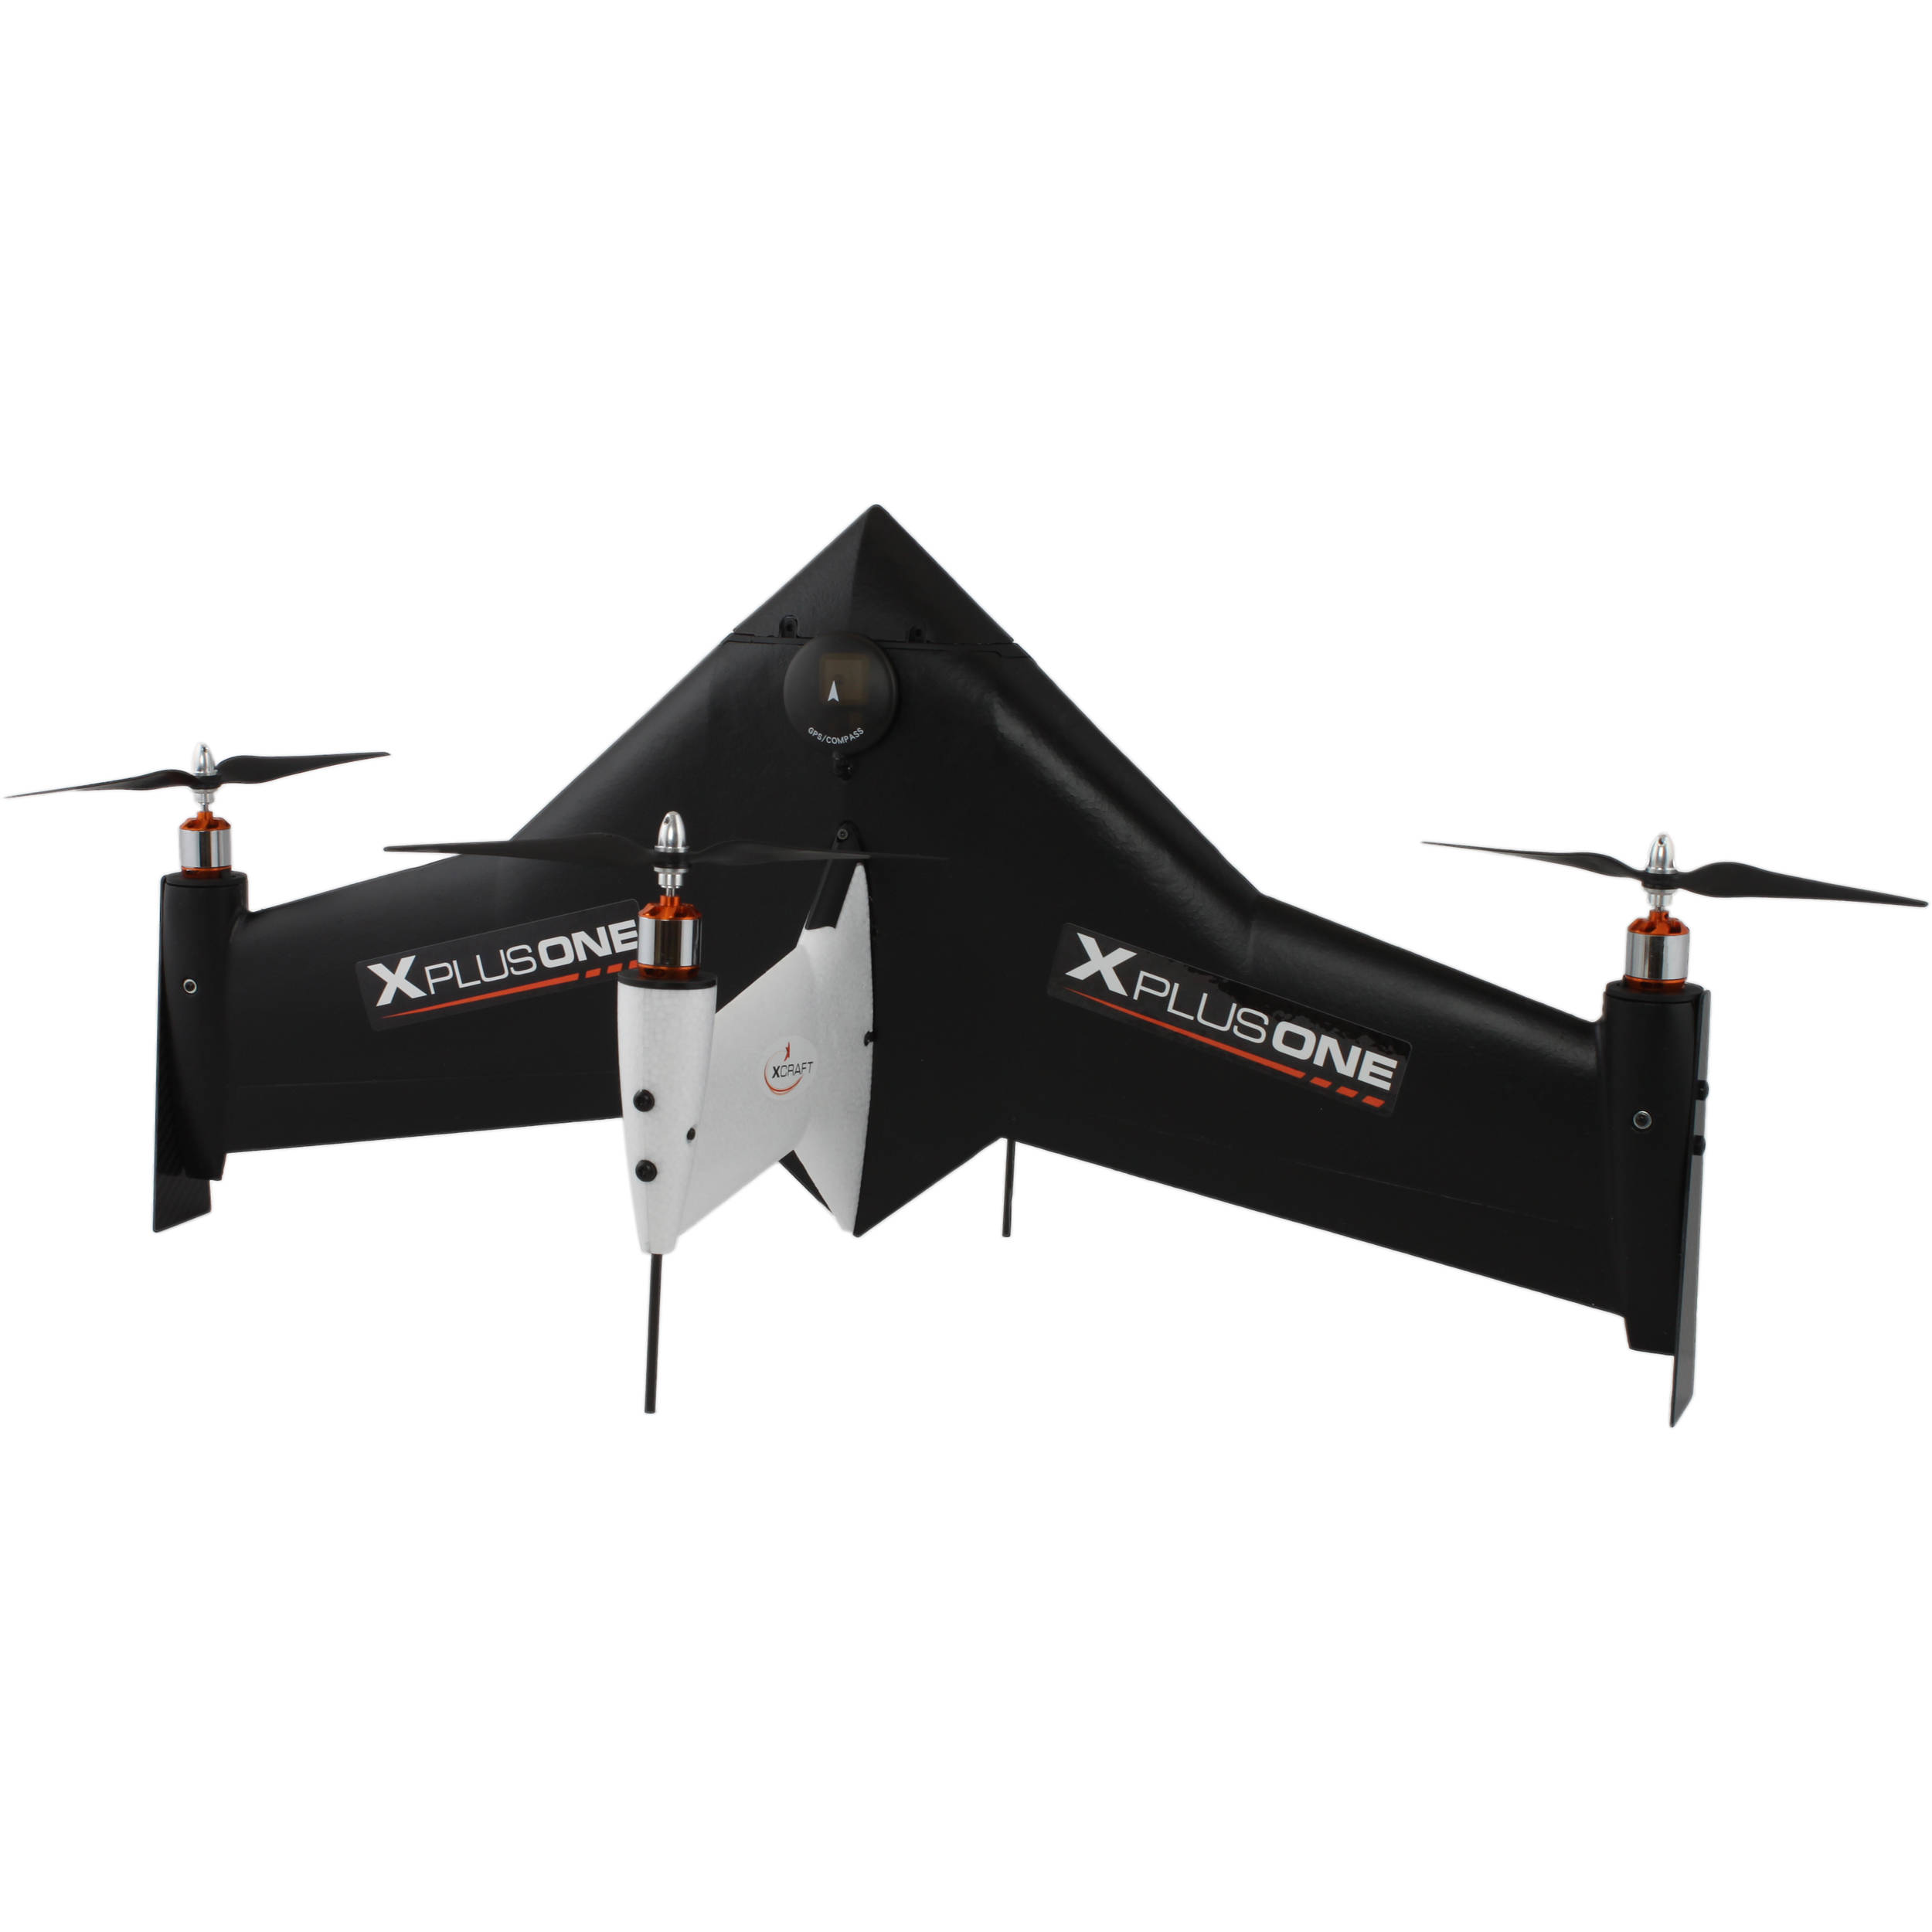 Xcraft Propeller Props for XPlusOne Drone Set of 4